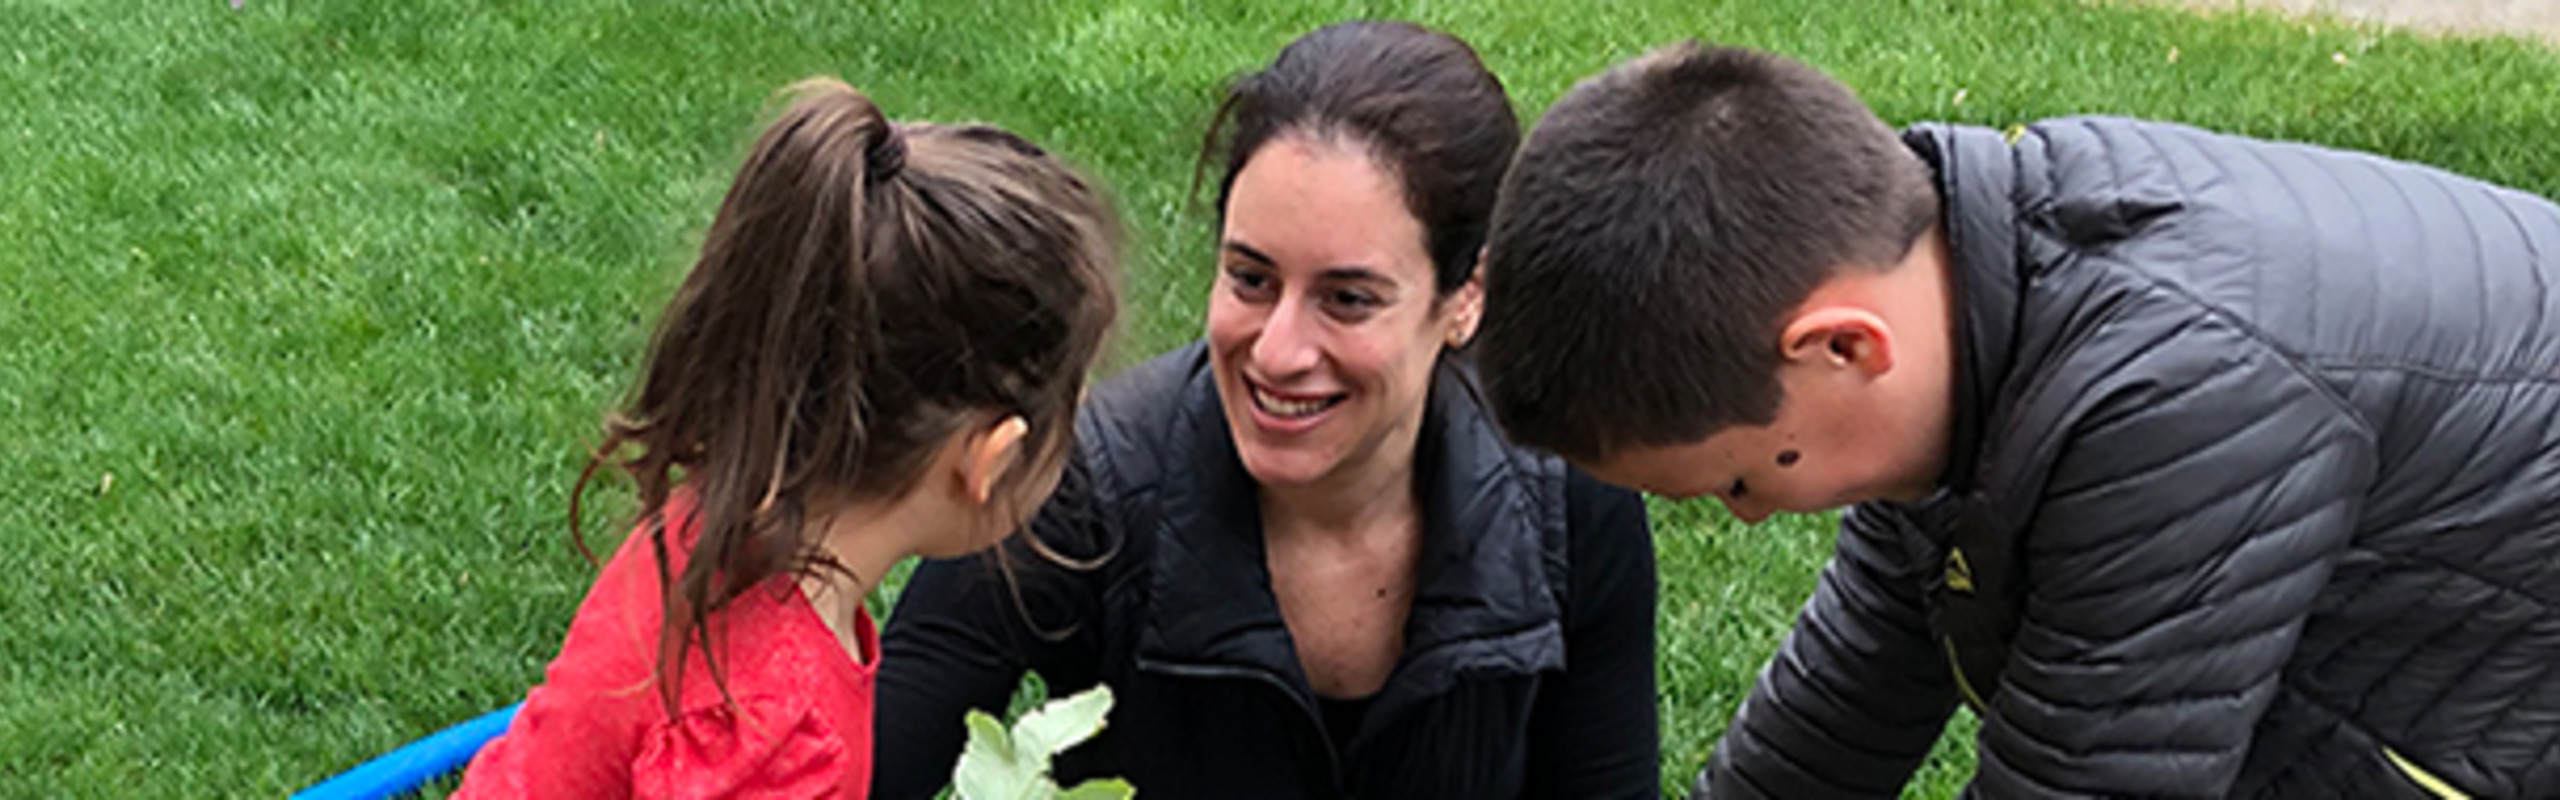 Laurie Cordova gardening with her children